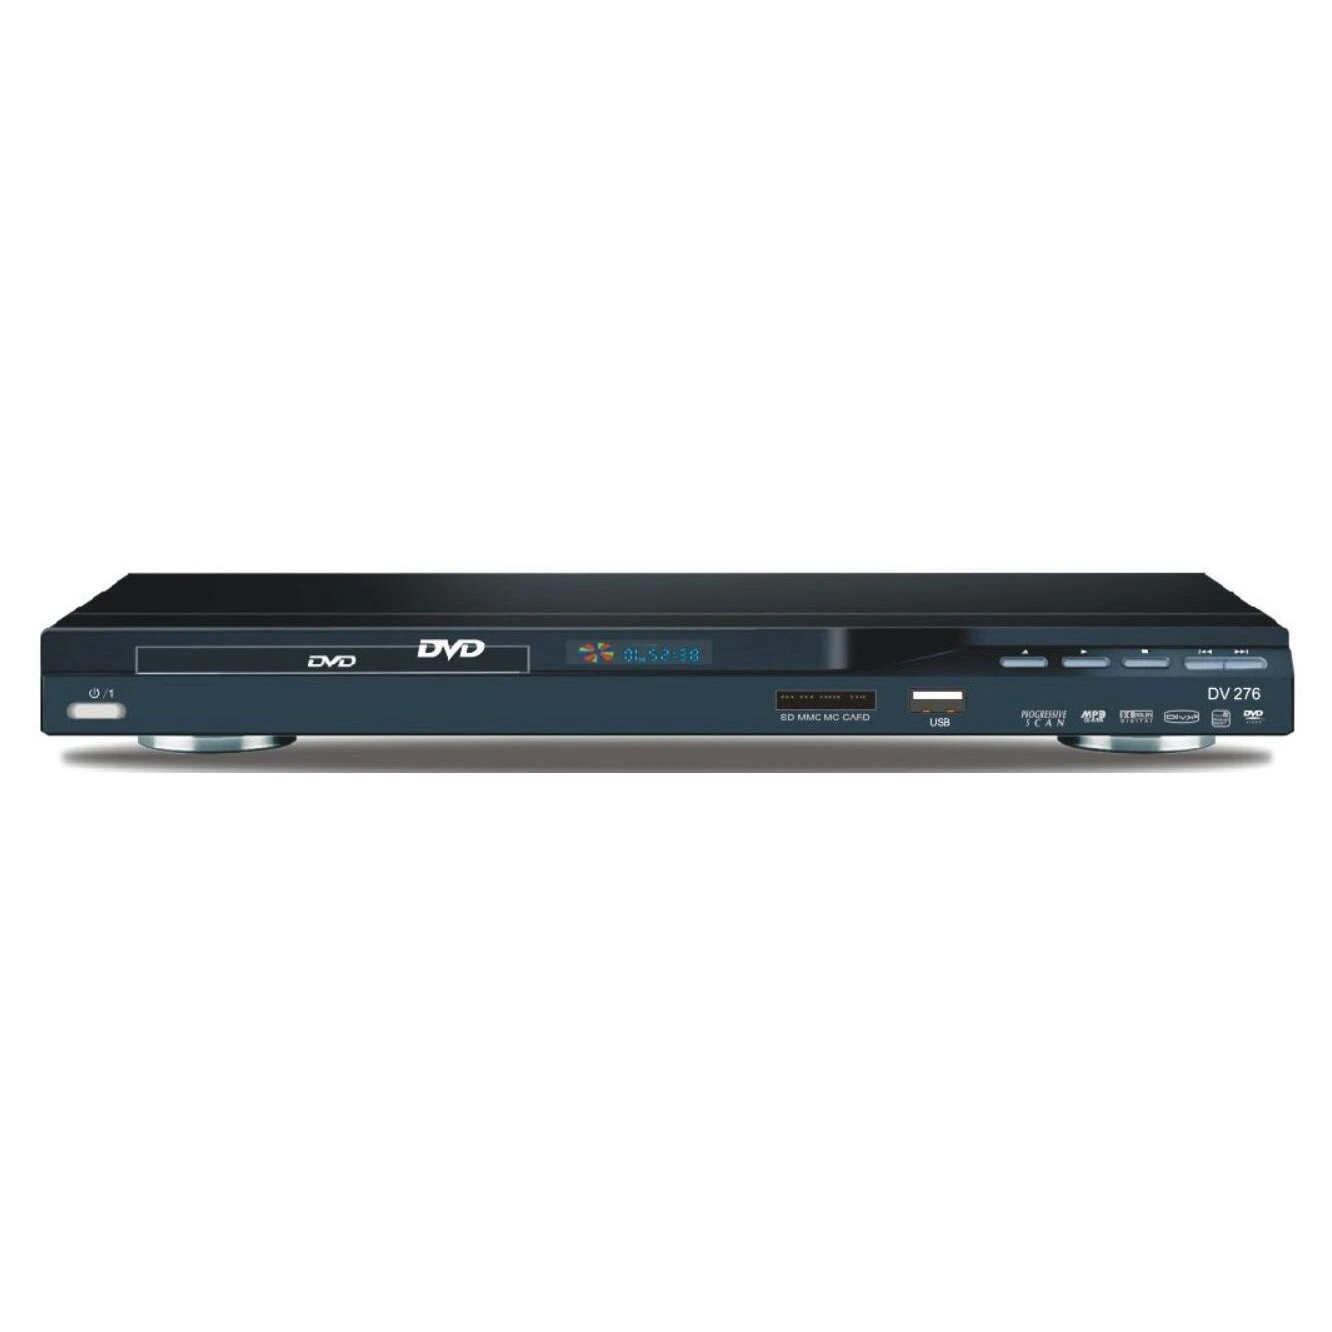 Reproductor de DVD Home Theater con USB/SD/Entradas y salidas HDMI